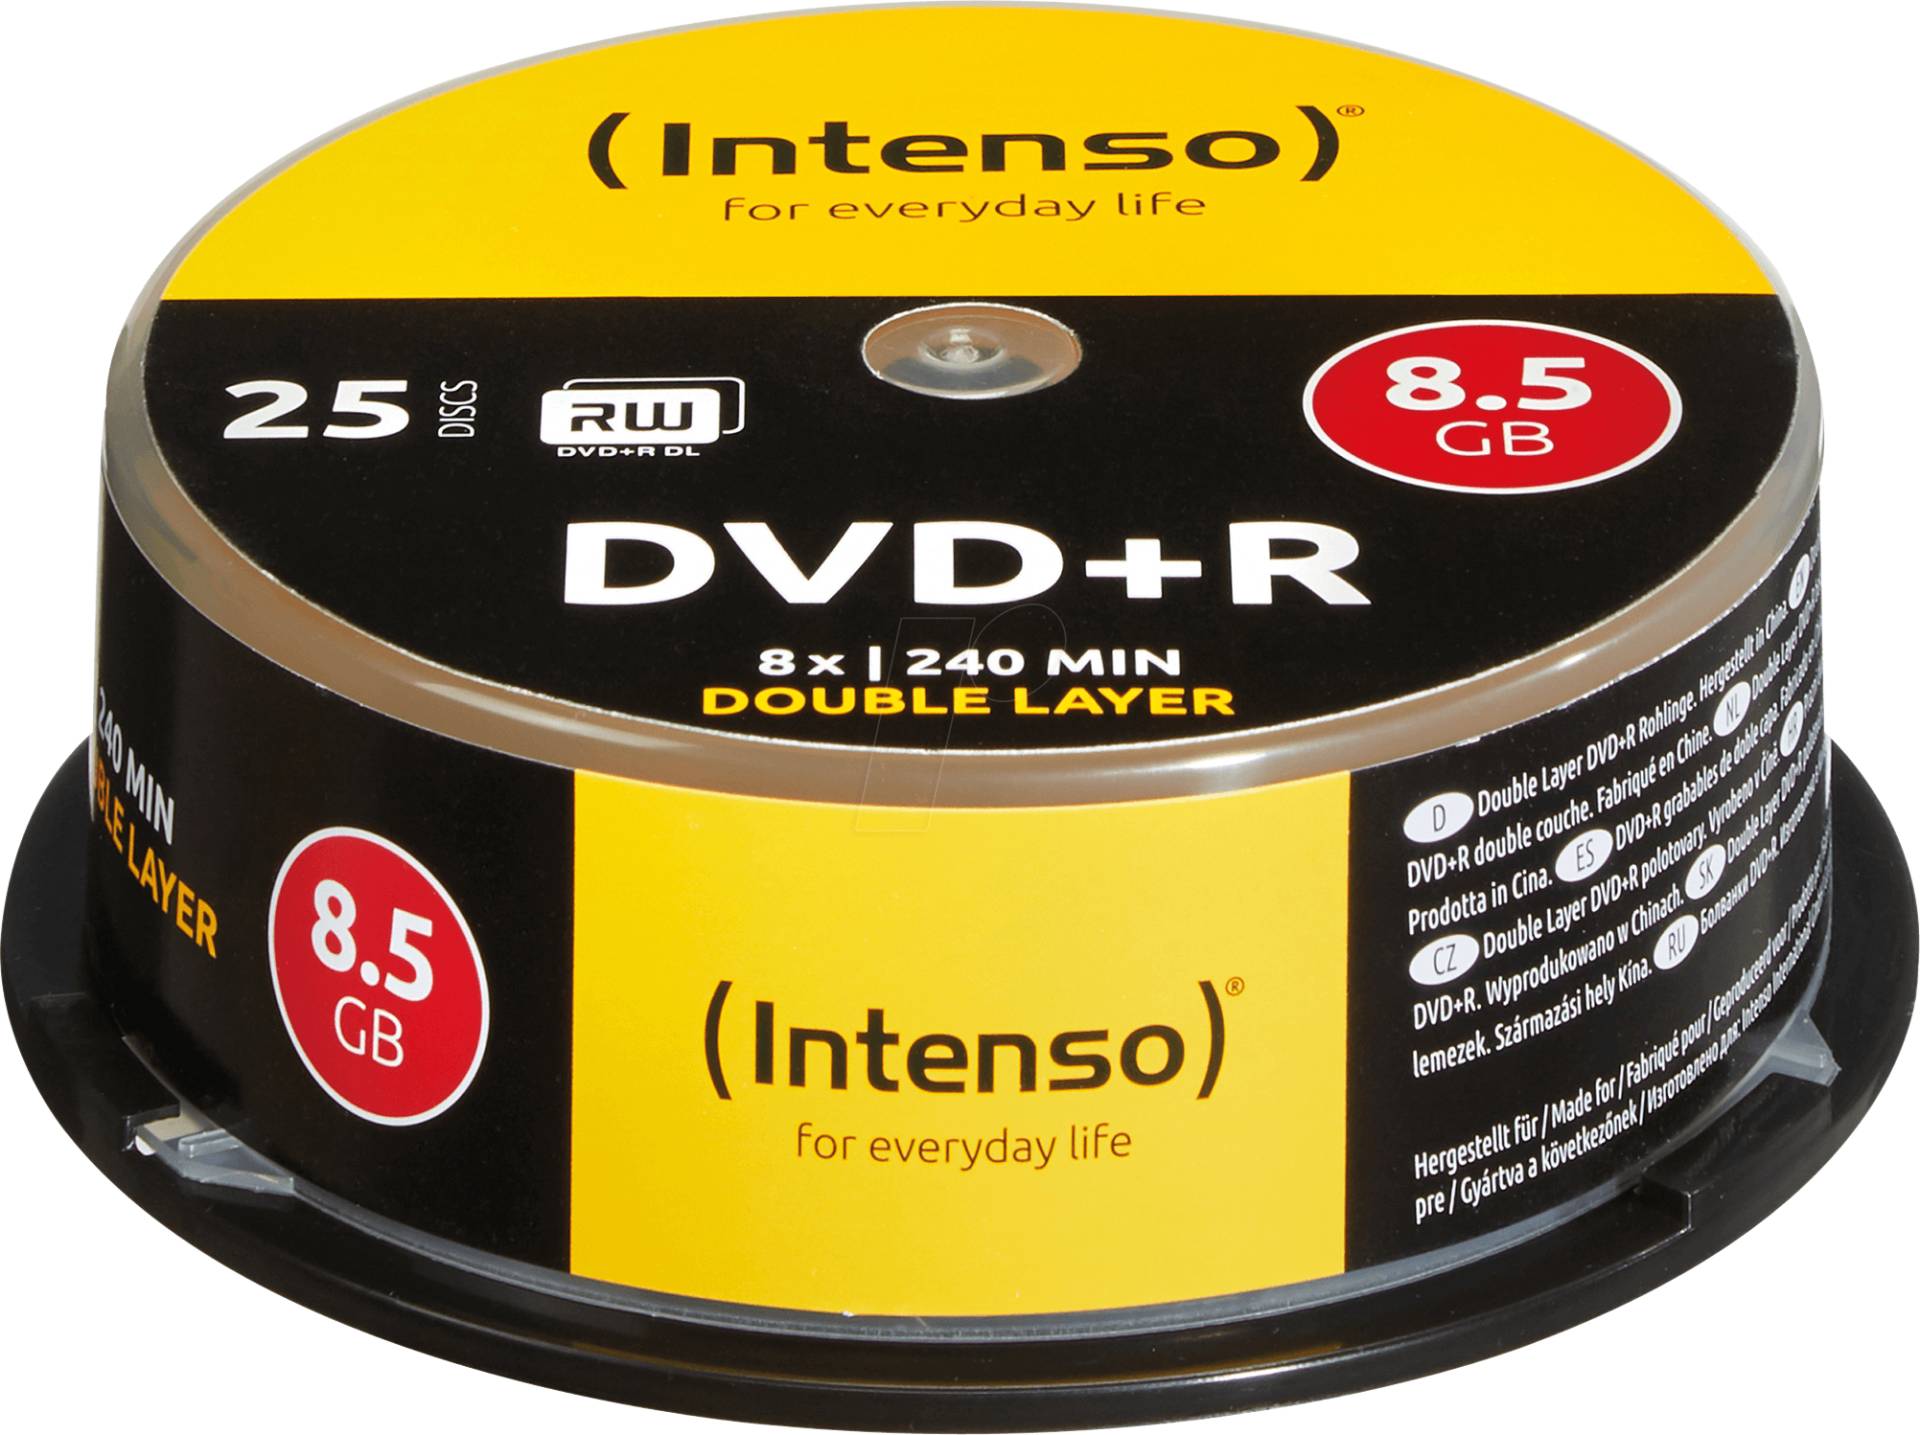 DVD+R8,5 INT25 - Intenso DVD+R 8,5GB, 25er Pack, DoubleLayer von Intenso